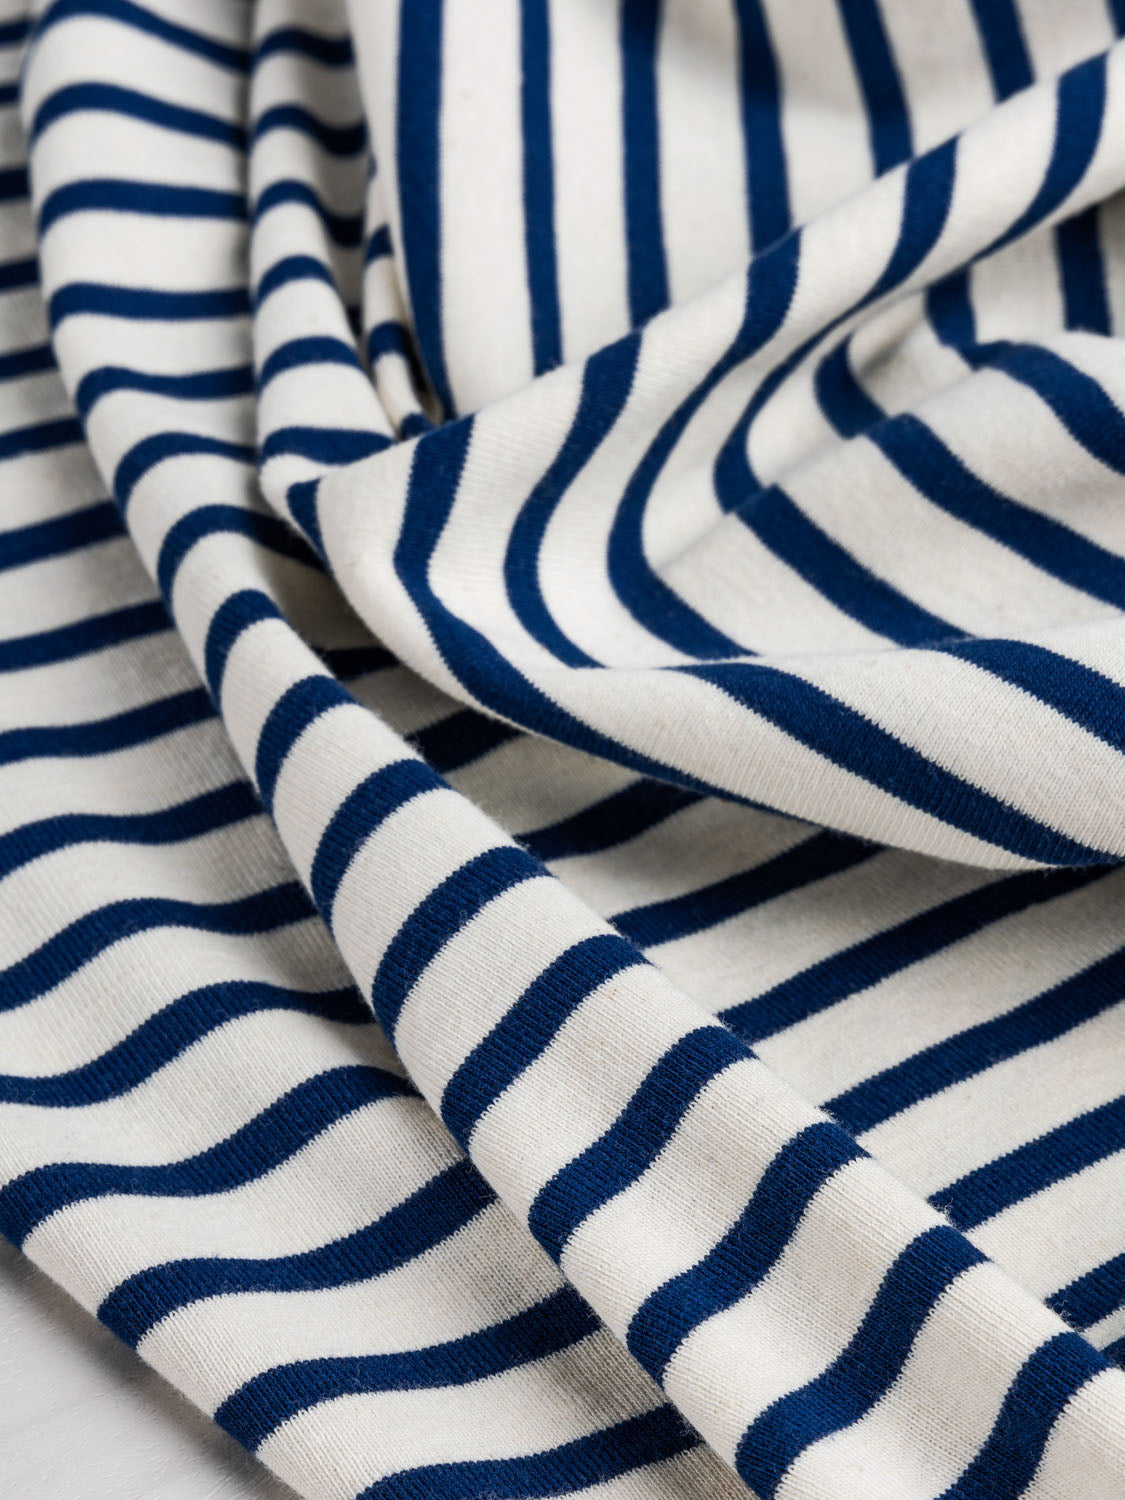 FLEECE FABRIC - PLAIN – DRESS FABRIC – Global Fabrics